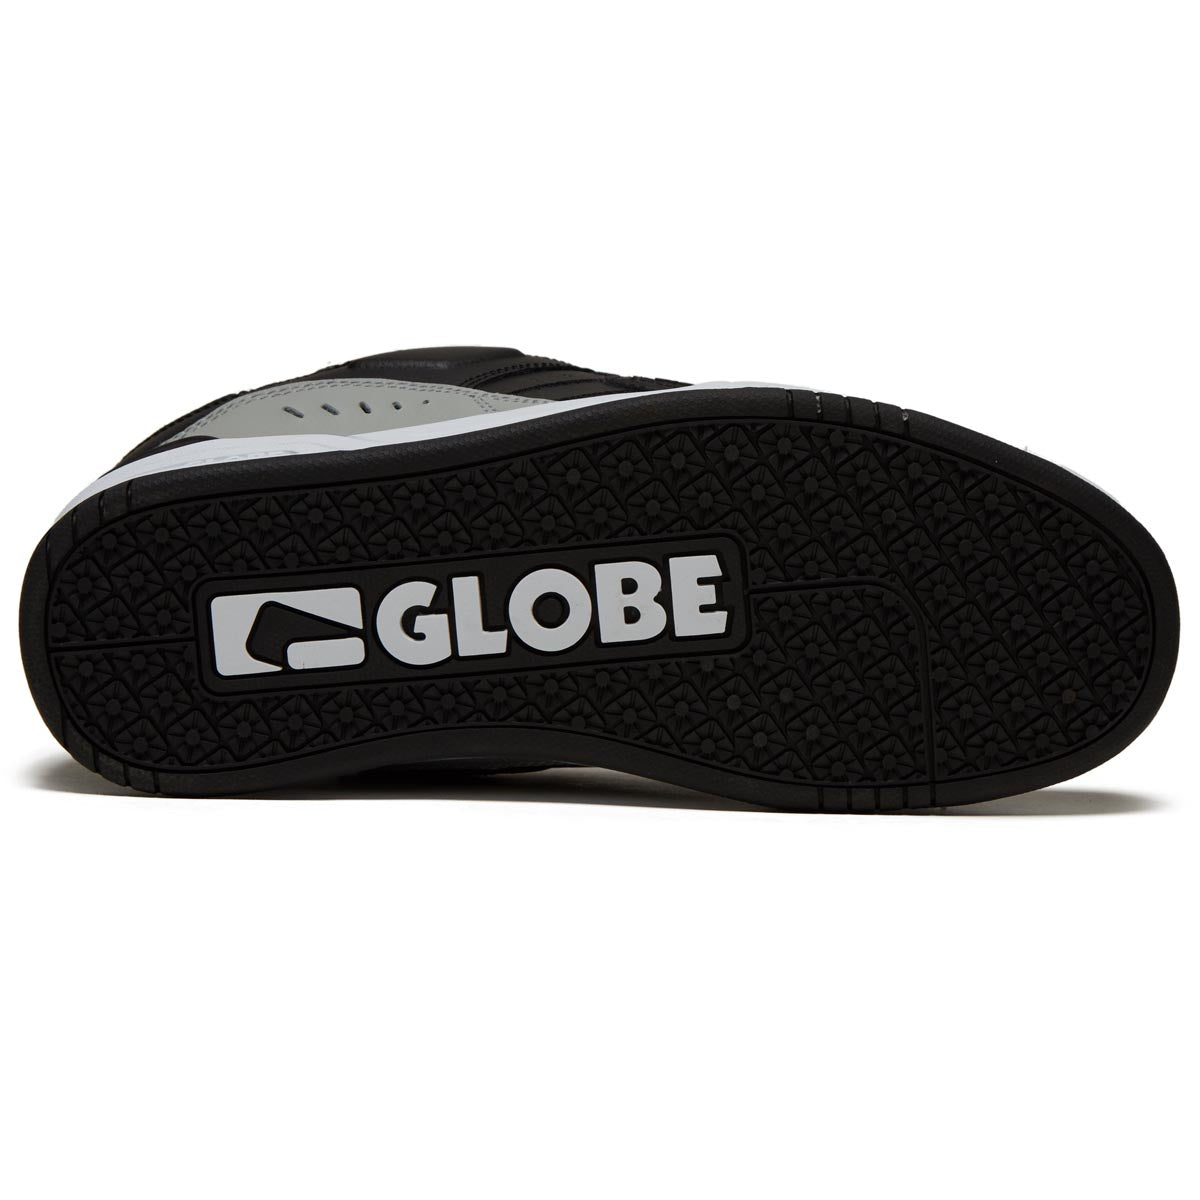 Globe Fusion Shoes - Black/Steel/White image 4